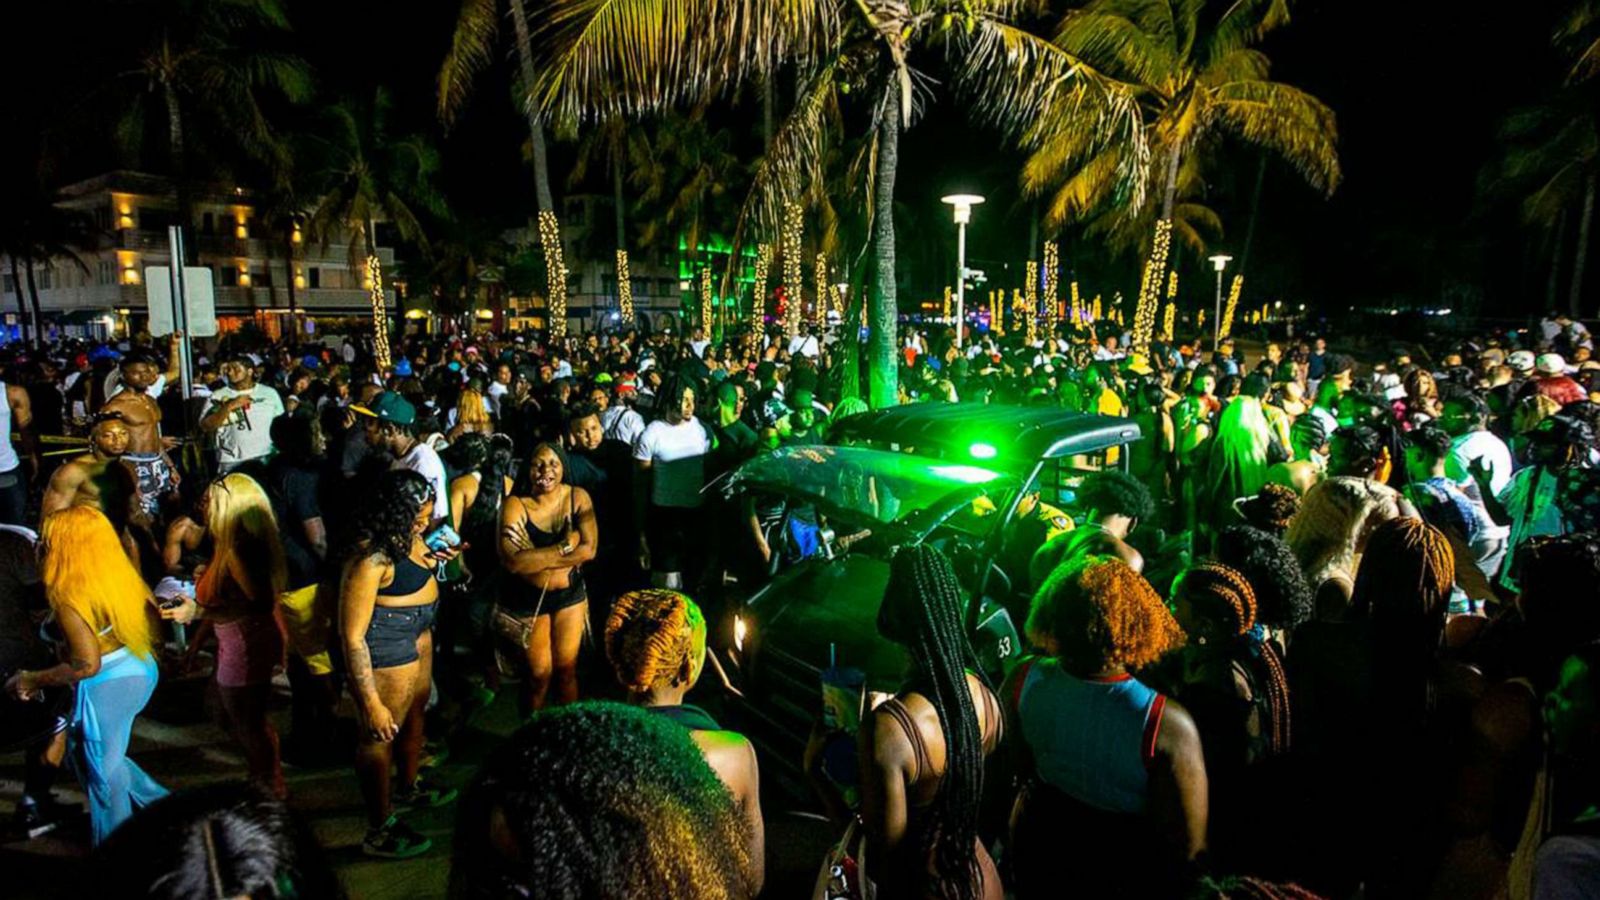 Miami Beach sets curfew to curb spring break violence - ABC News